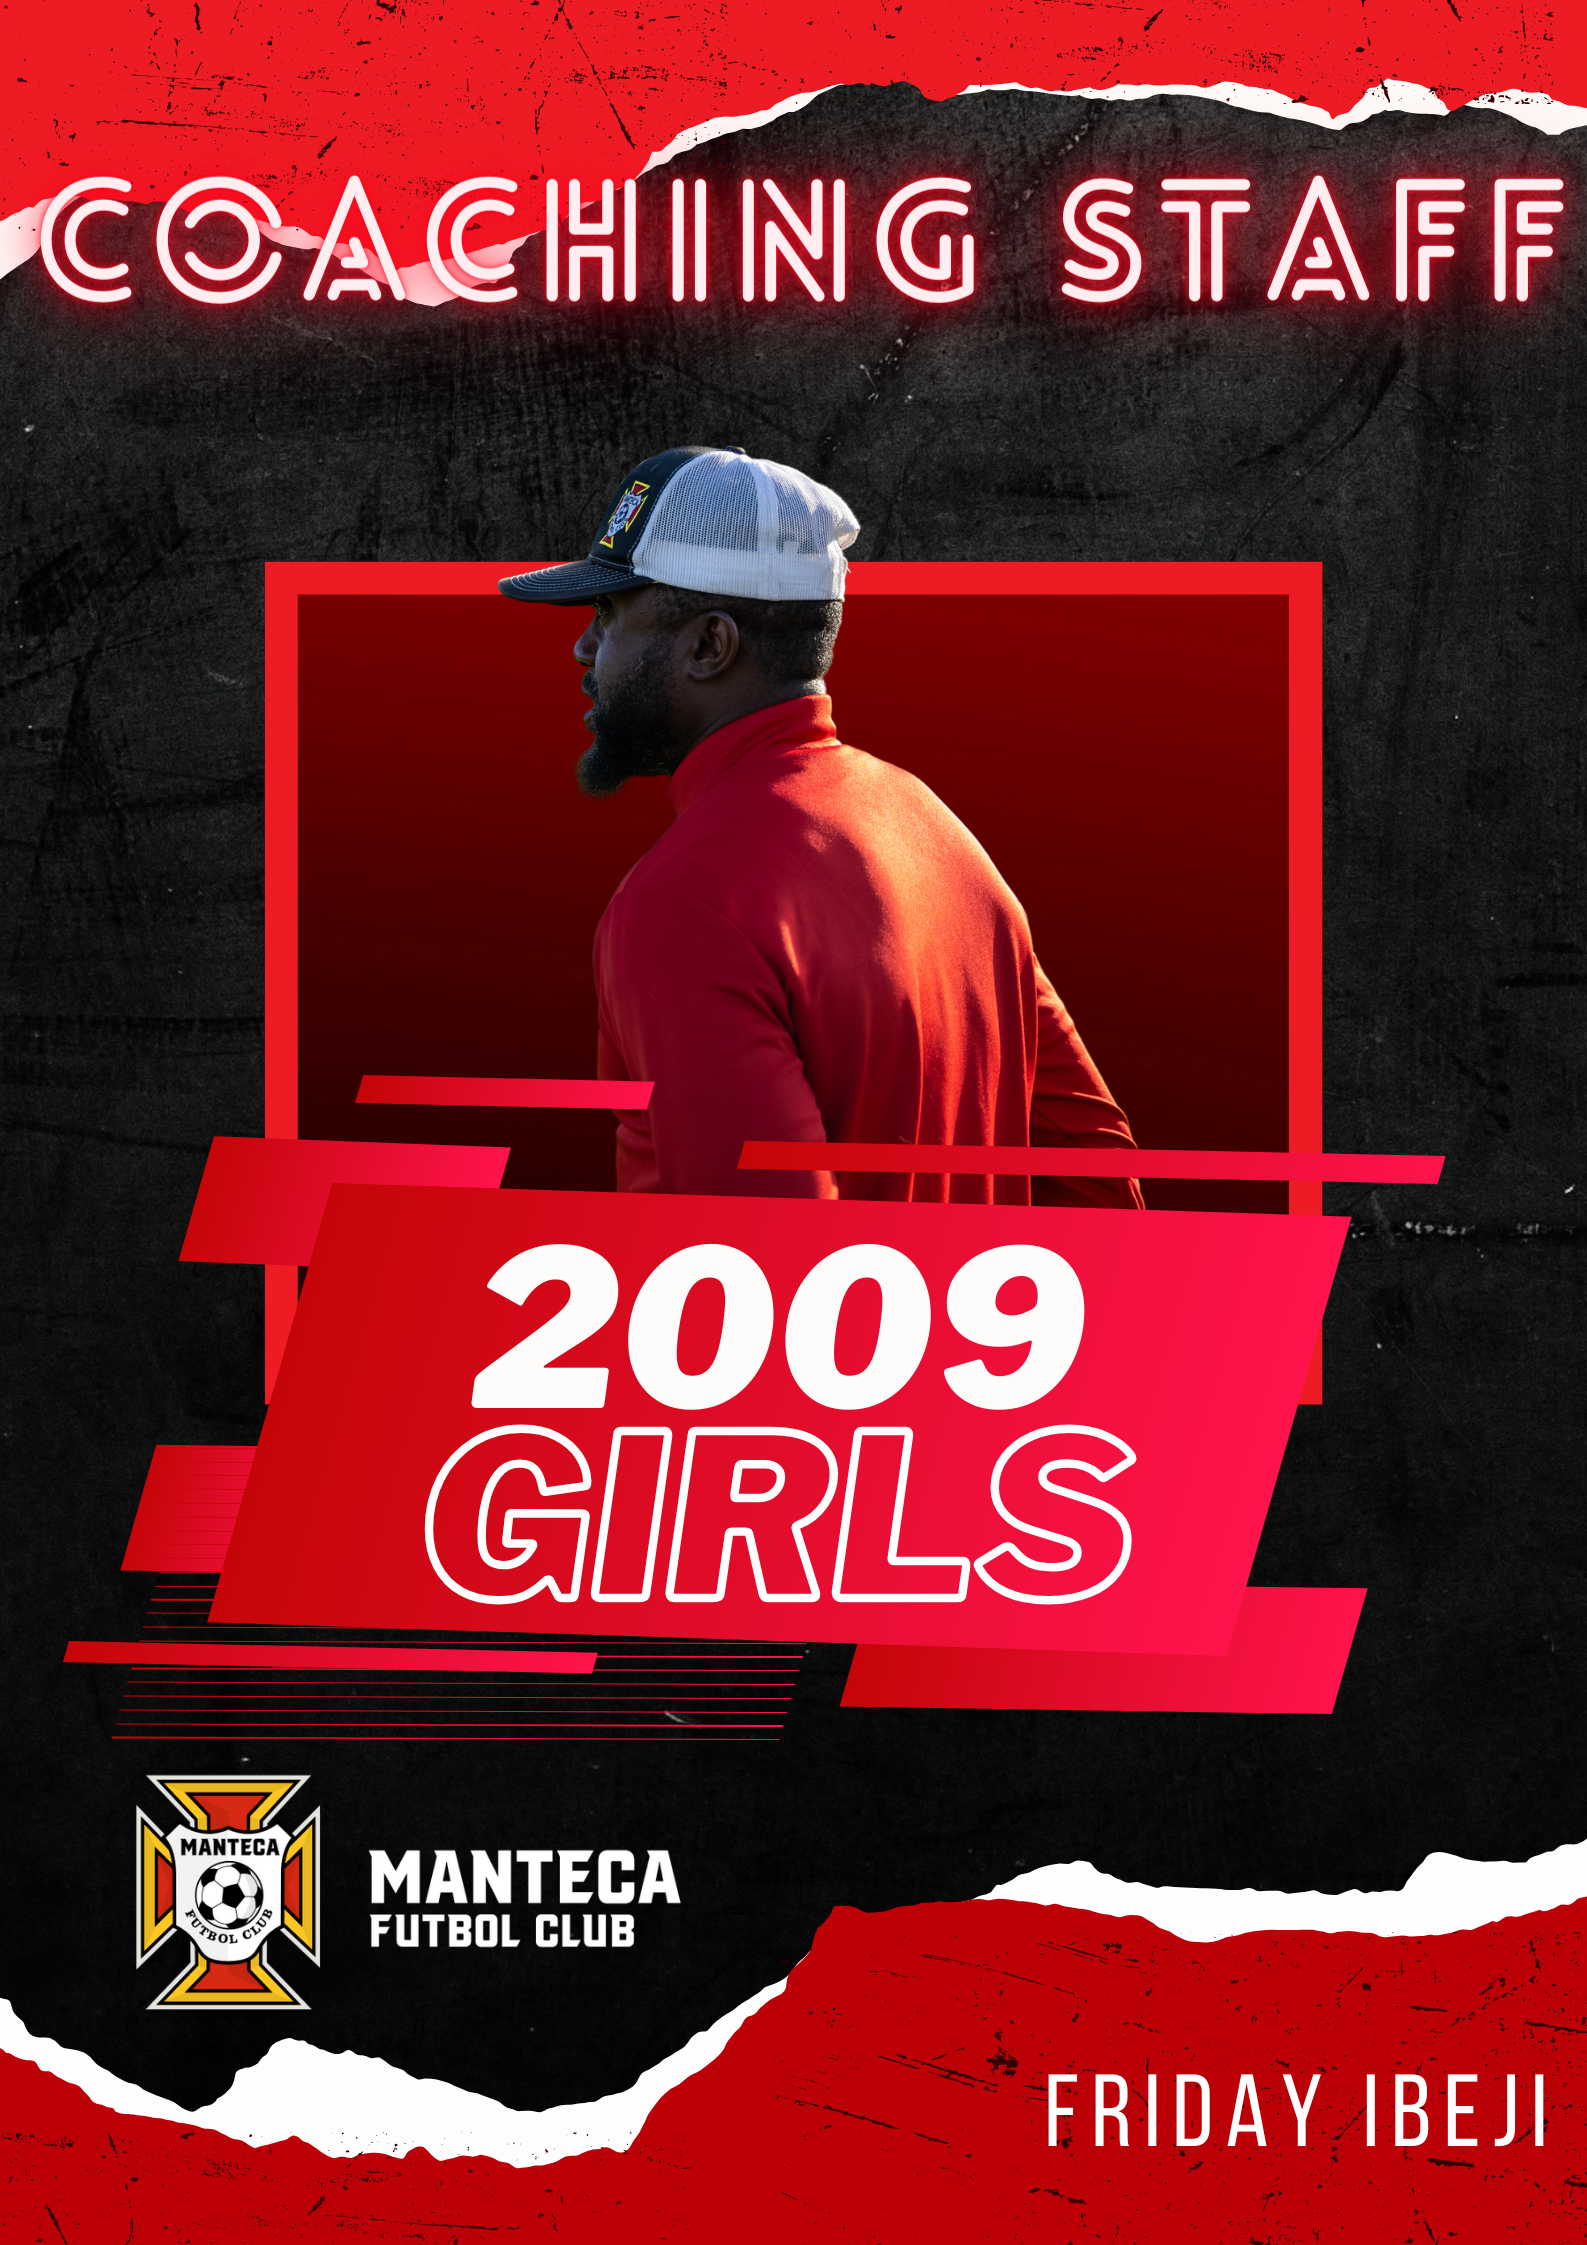 Manteca Futbol Club 09 Girls Courage